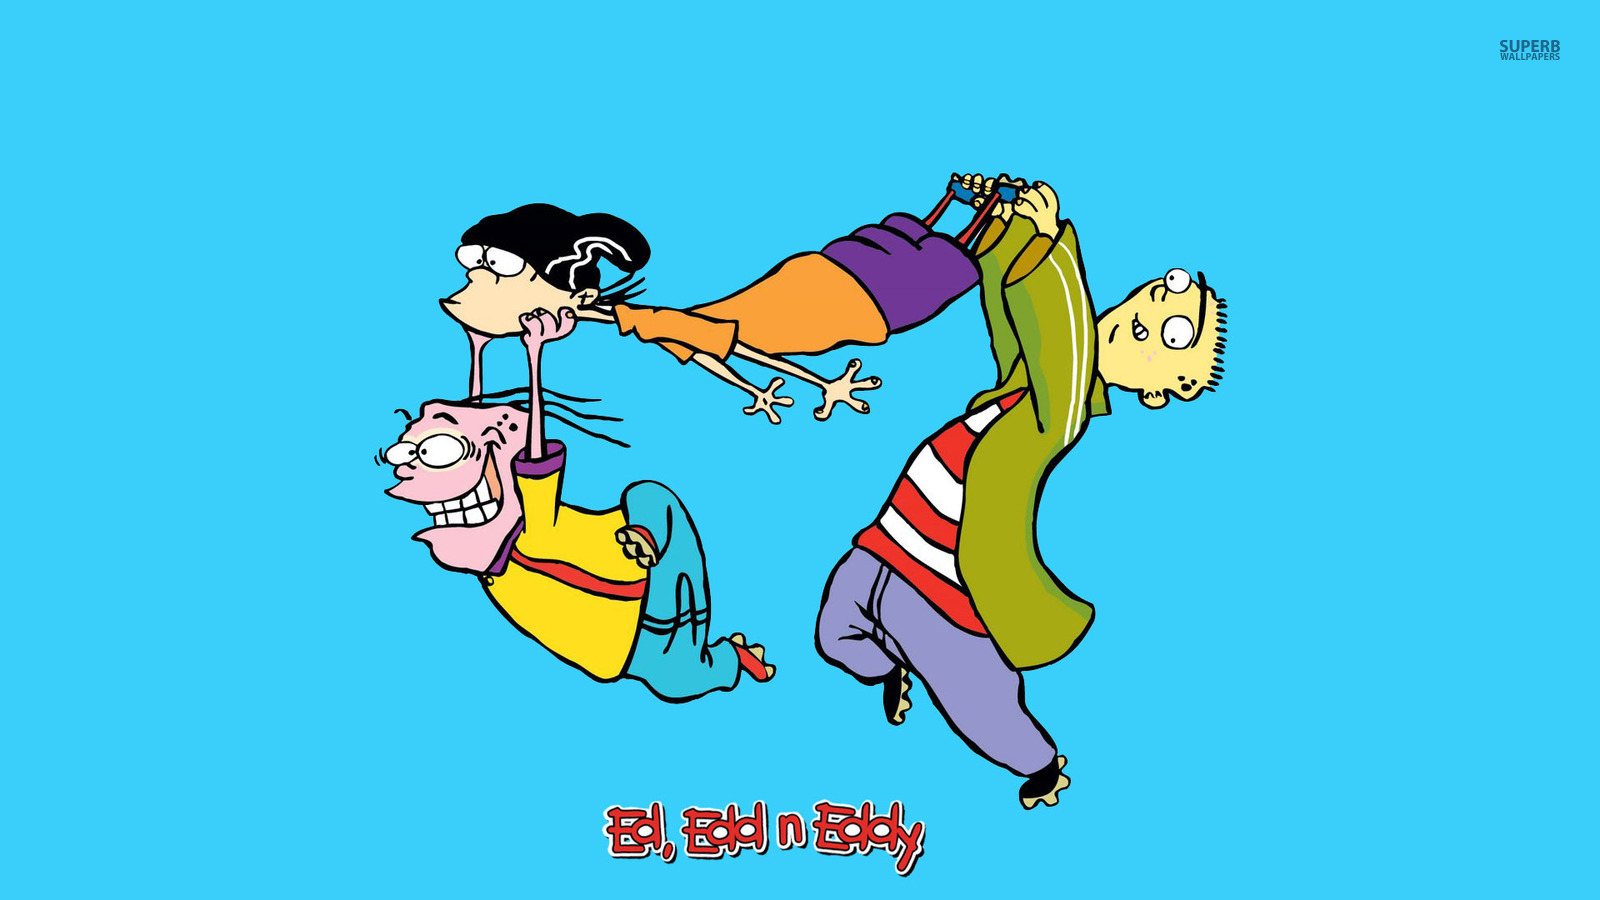 Ed, Edd n Eddy - Characters - Cartoon Network - wide 2